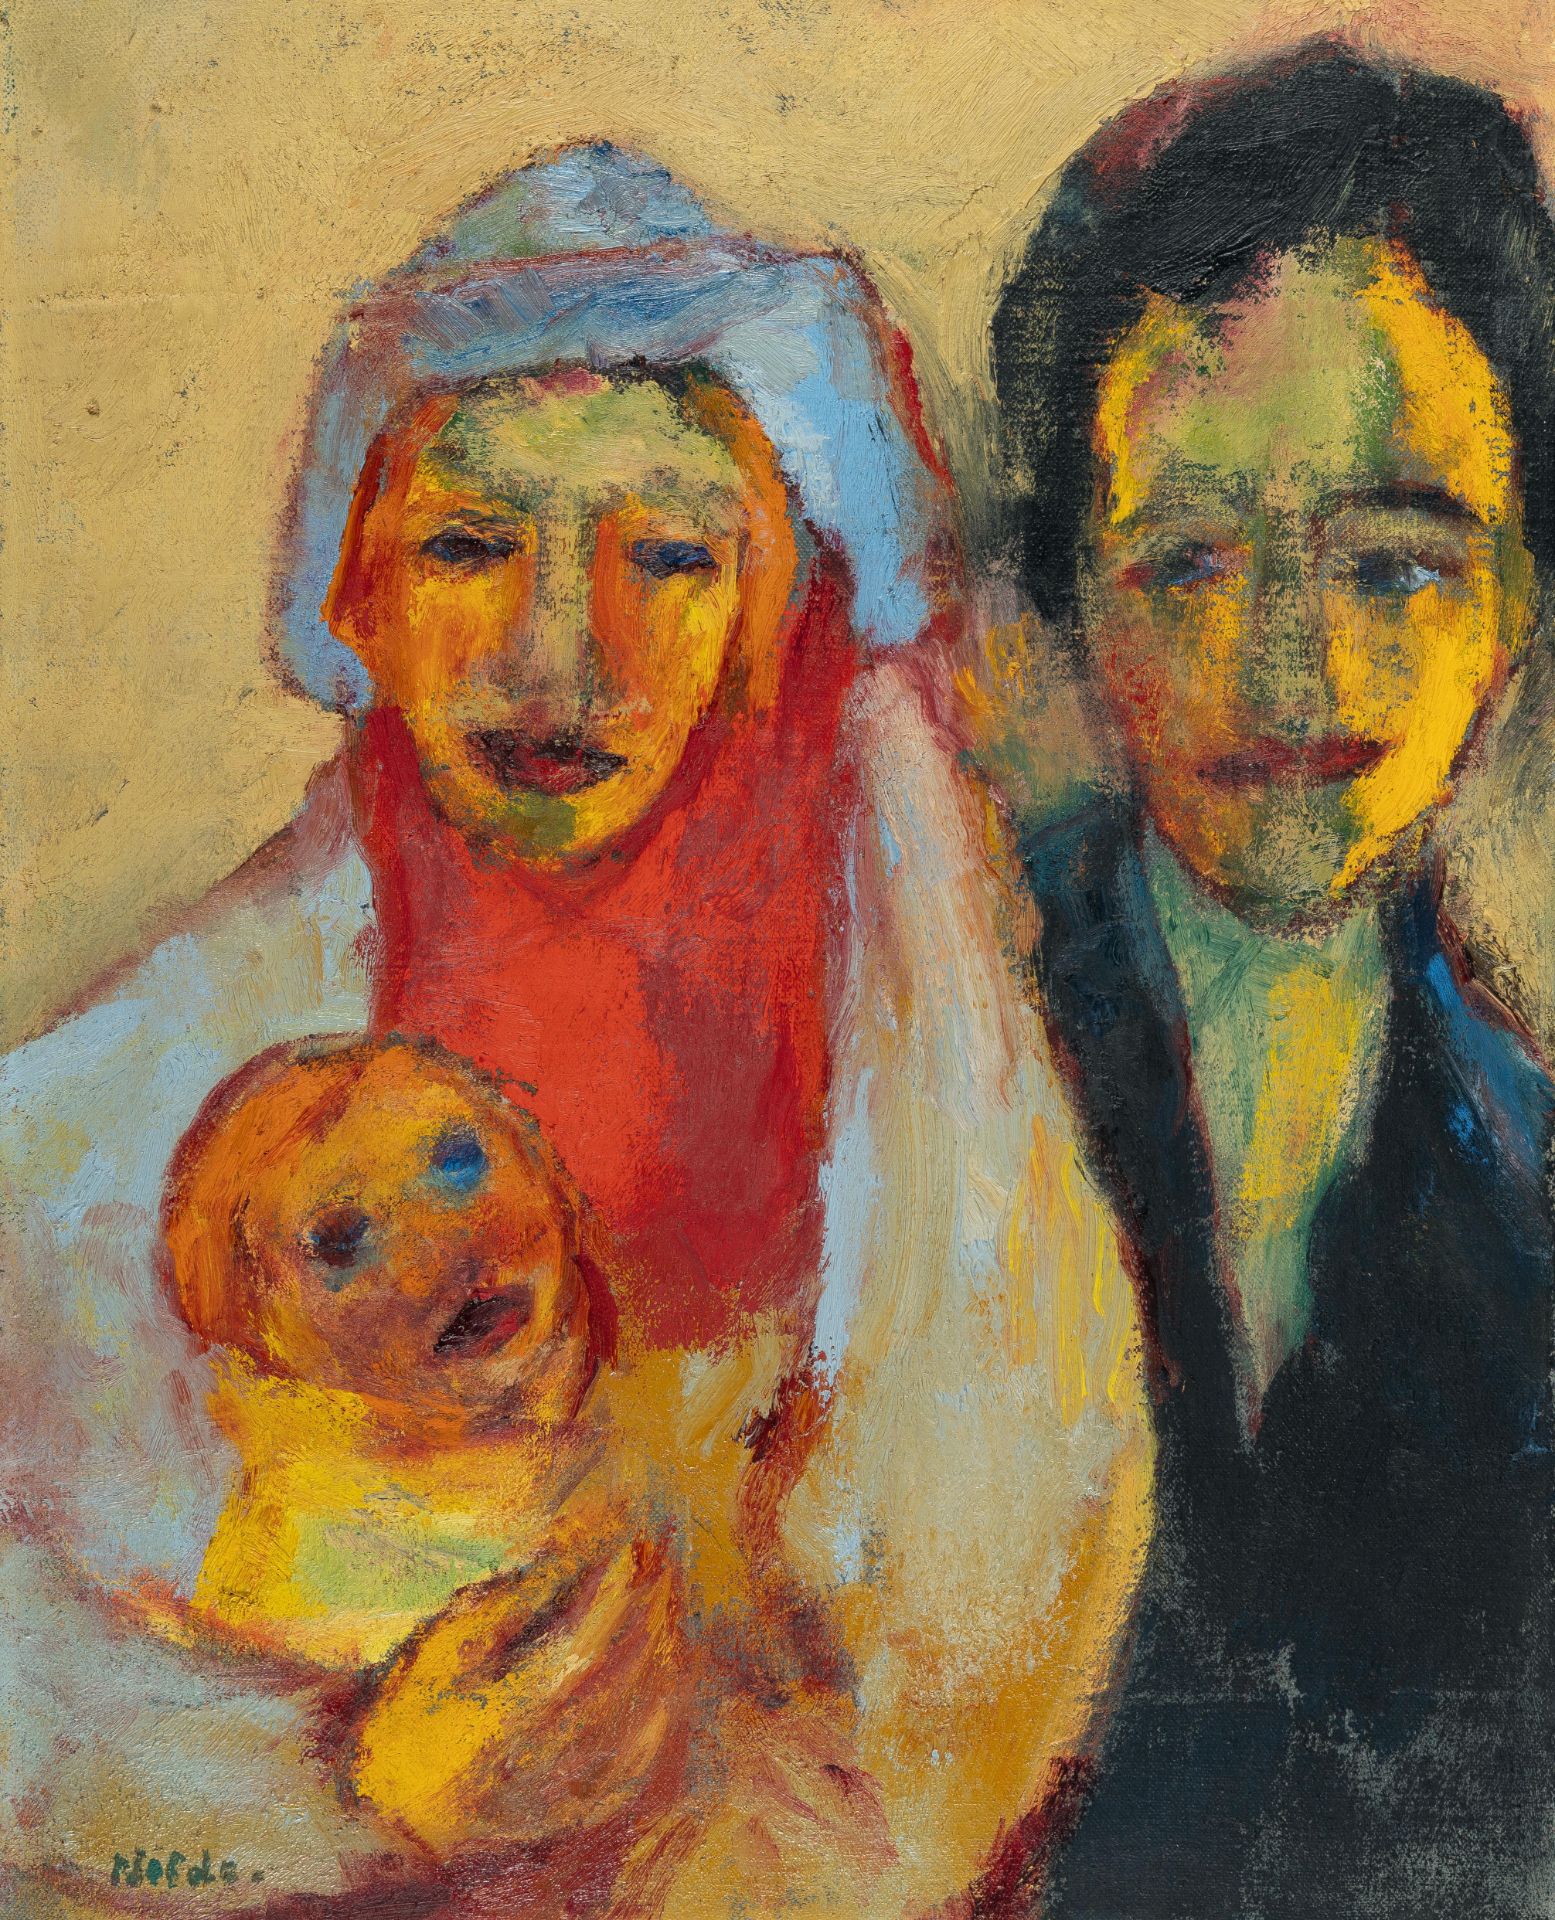 Emil Nolde (1867 Nolde - Seebüll 1956) – „Junge Familie“ (Young family).Oil on canvas. (1949). C. 70